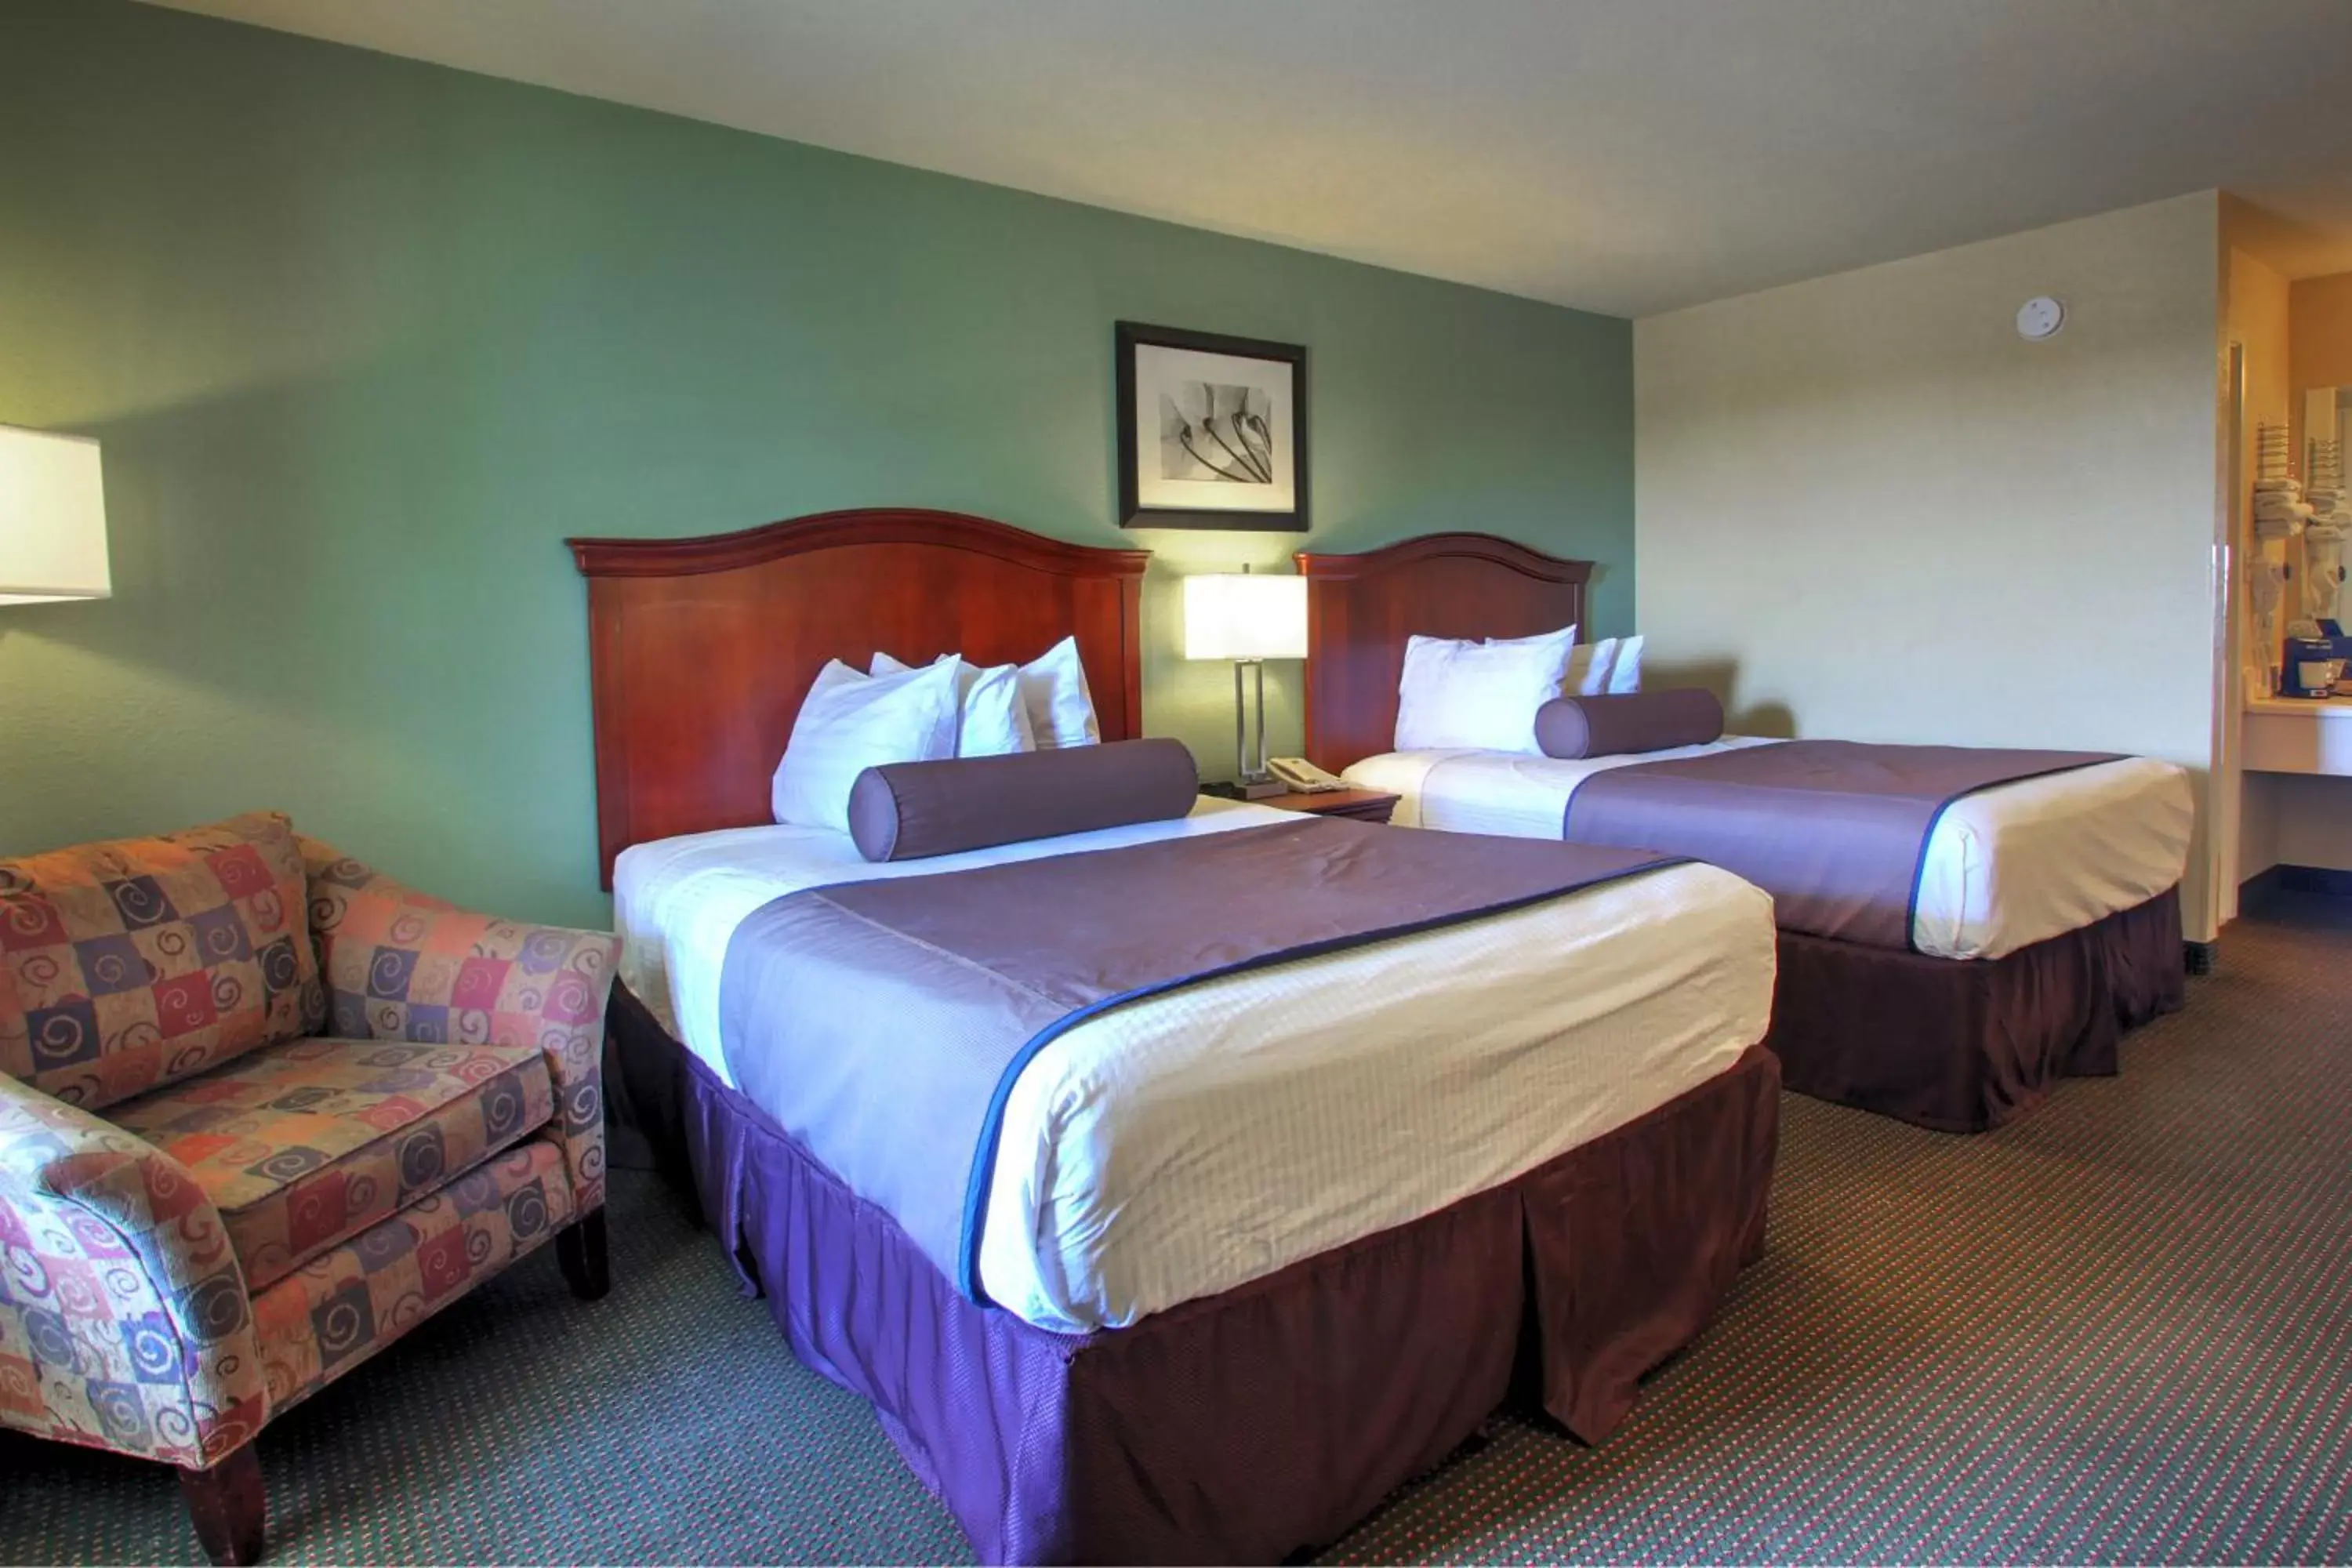 Bed in Key West Inn - Tunica Resort